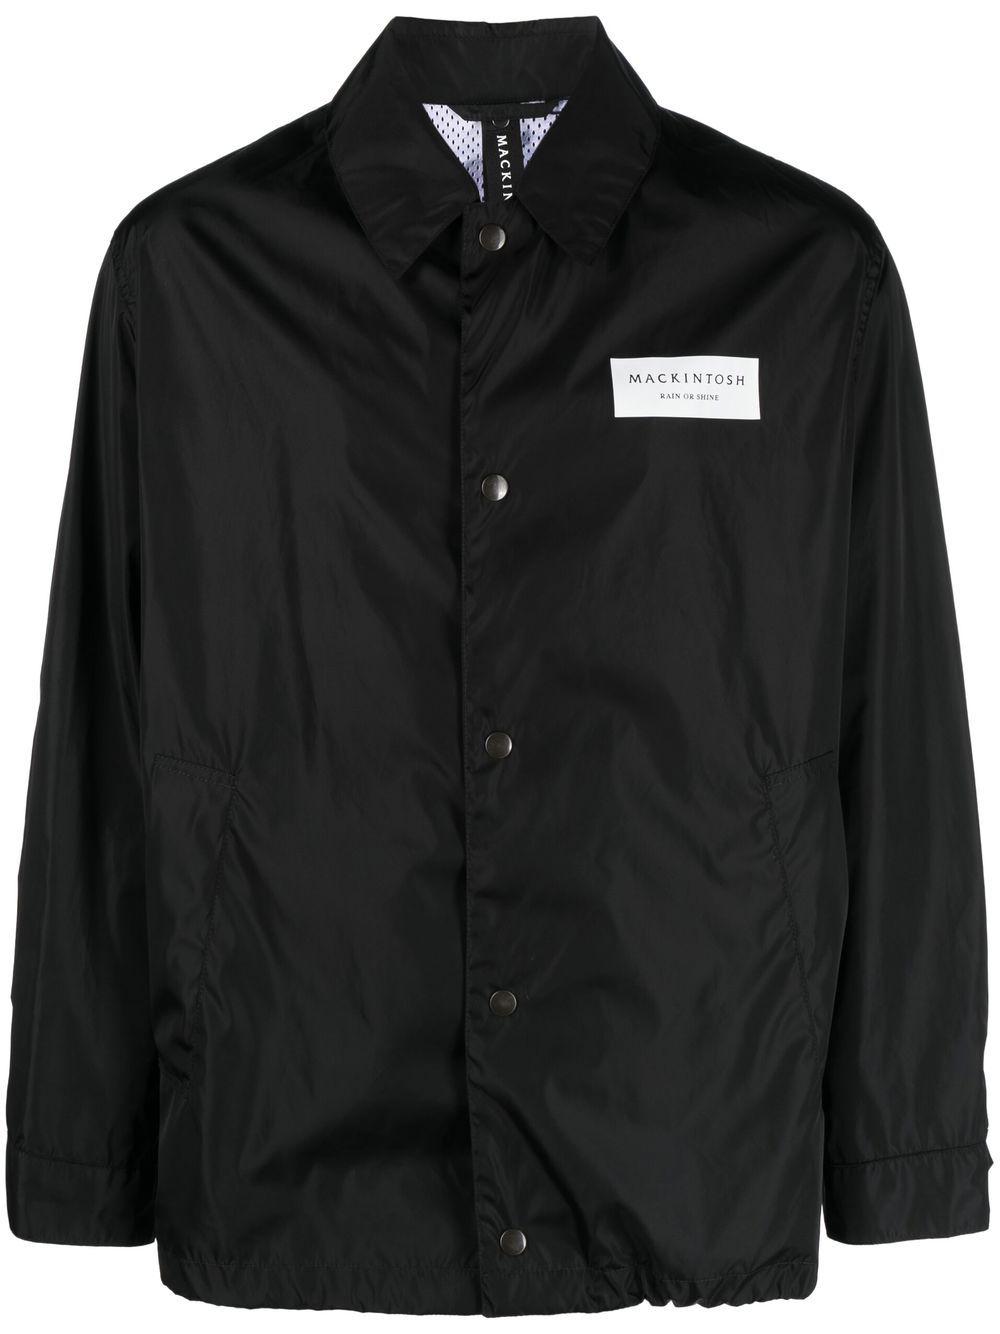 Mackintosh Teeming packable jacket - Black von Mackintosh